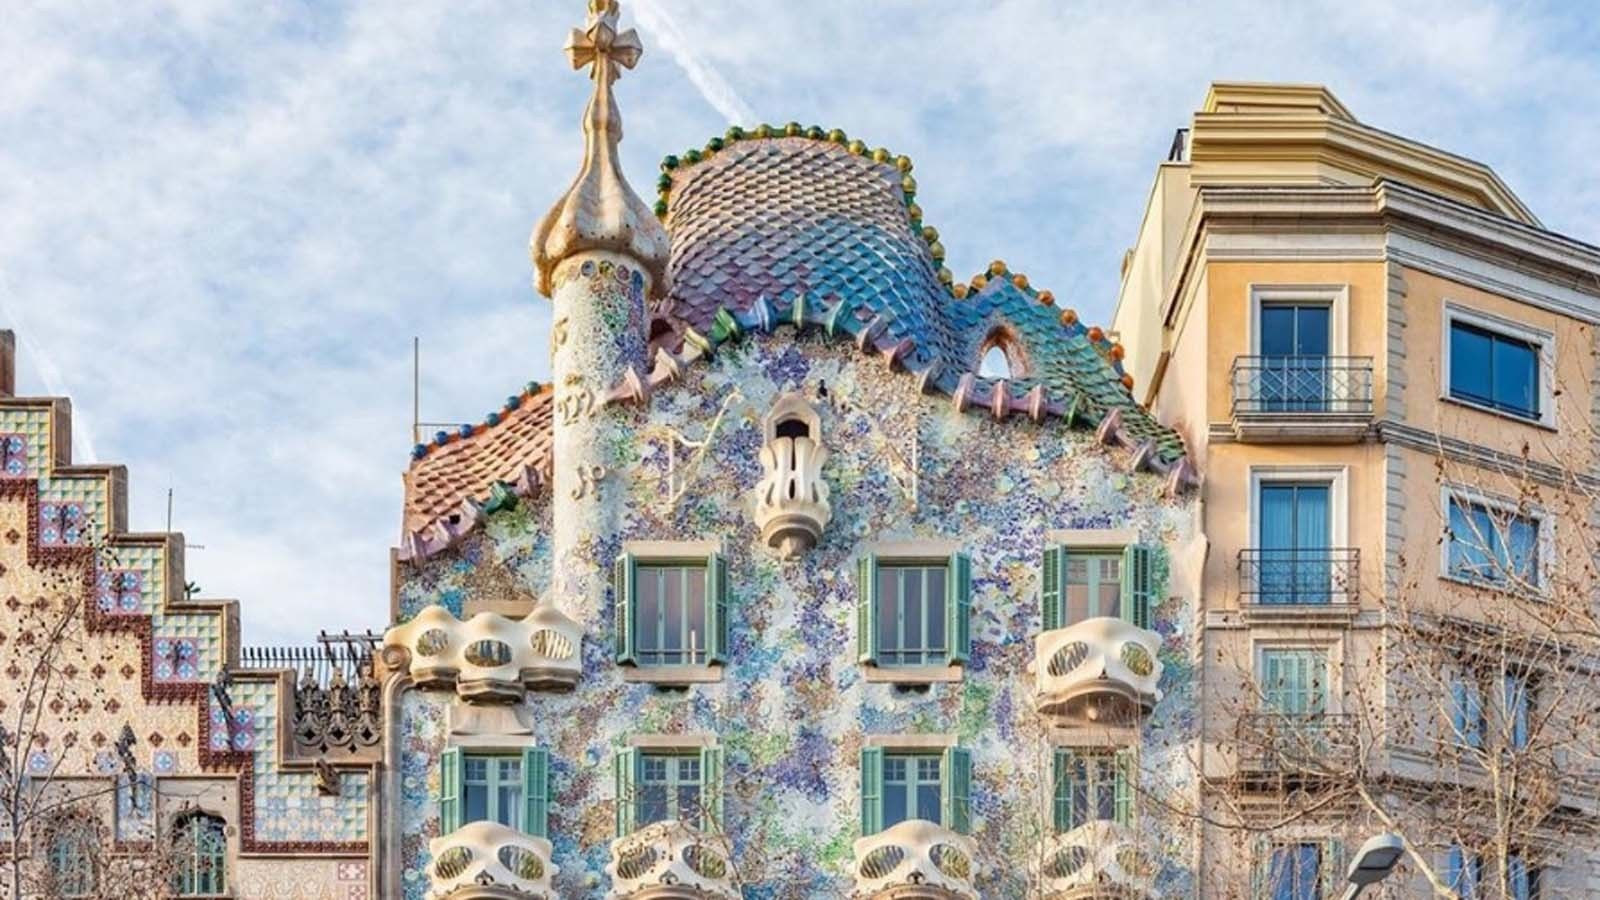 Casa Batlló, obra maestra y joya arquitectónica de Antoni Gaudí / CASA BATLLÓ